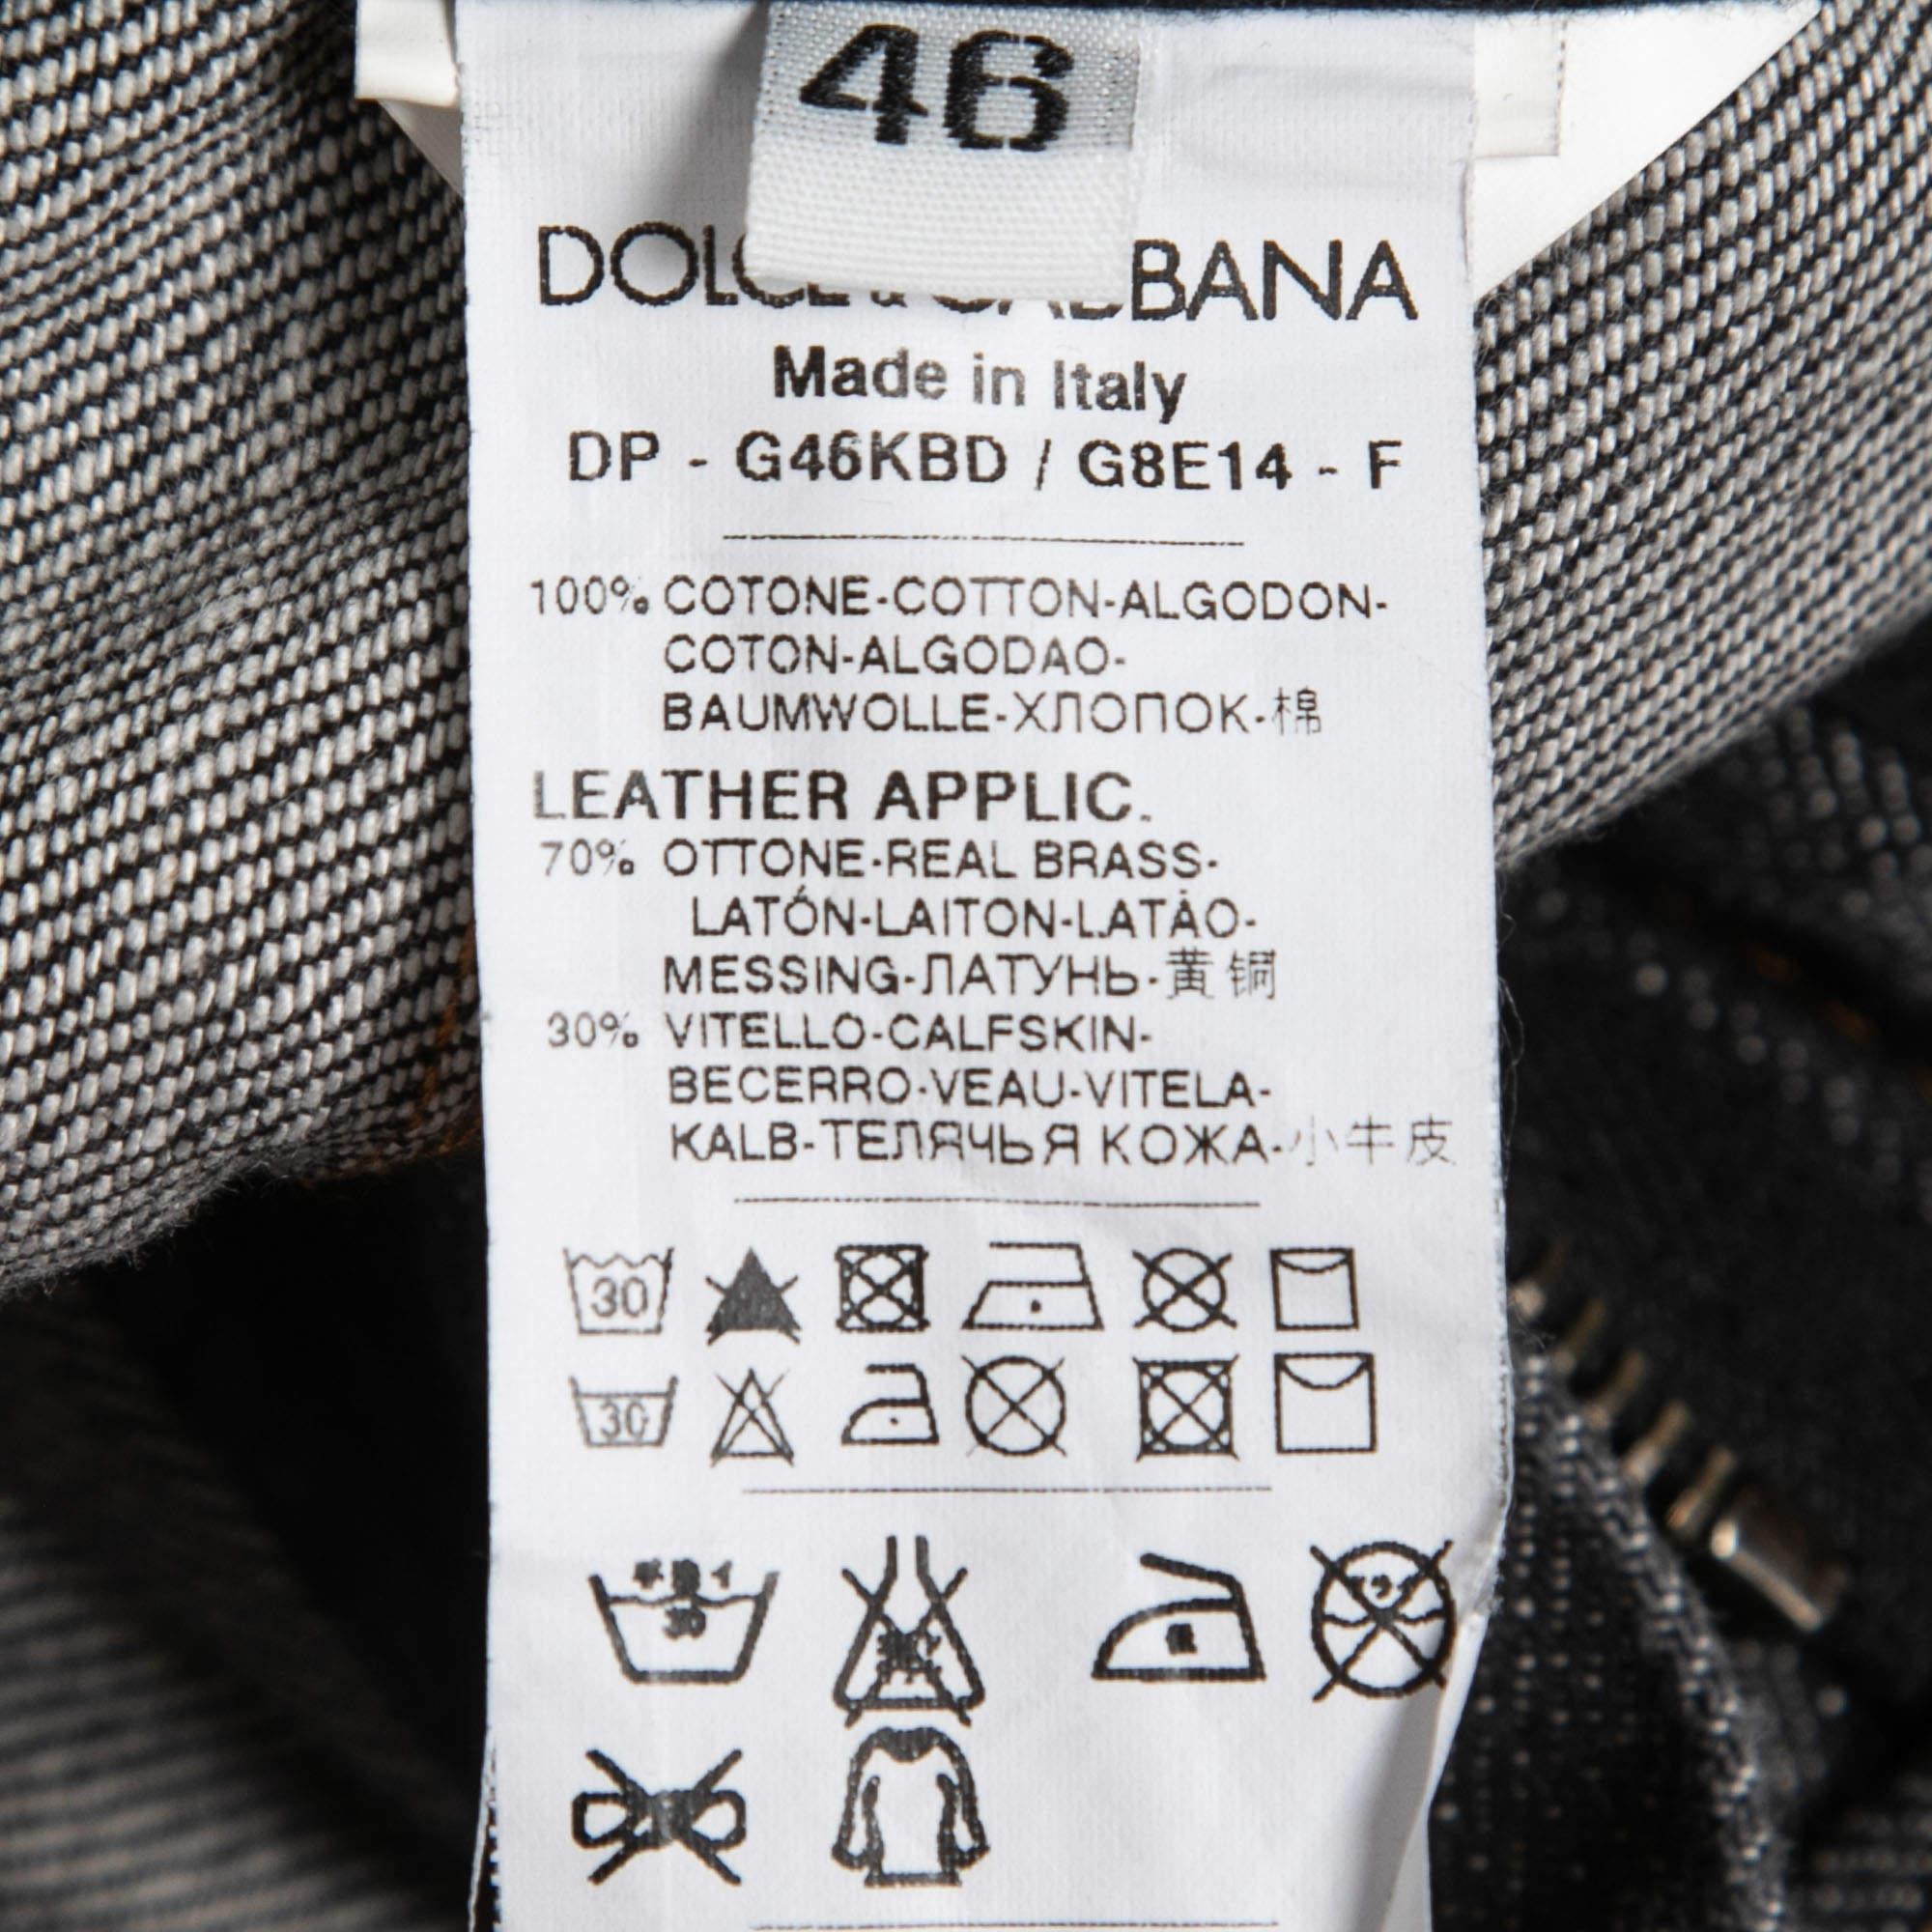 Dolce & Gabbana Grey Washed & Distressed Denim Jeans L Waist 32